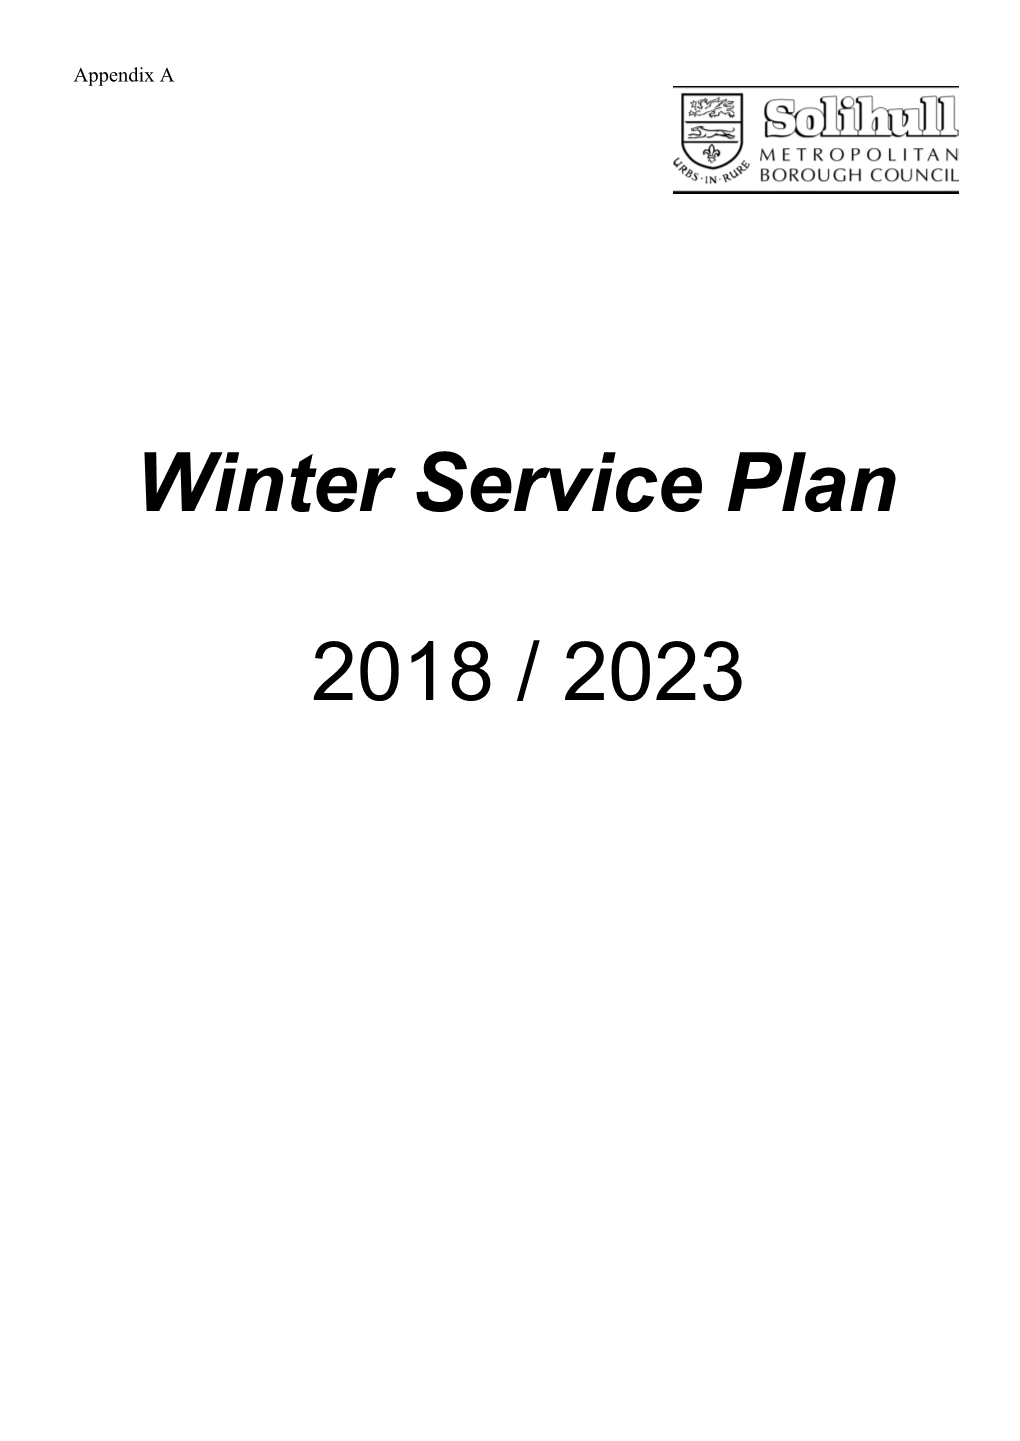 Winter Service Plan 2018 / 2023